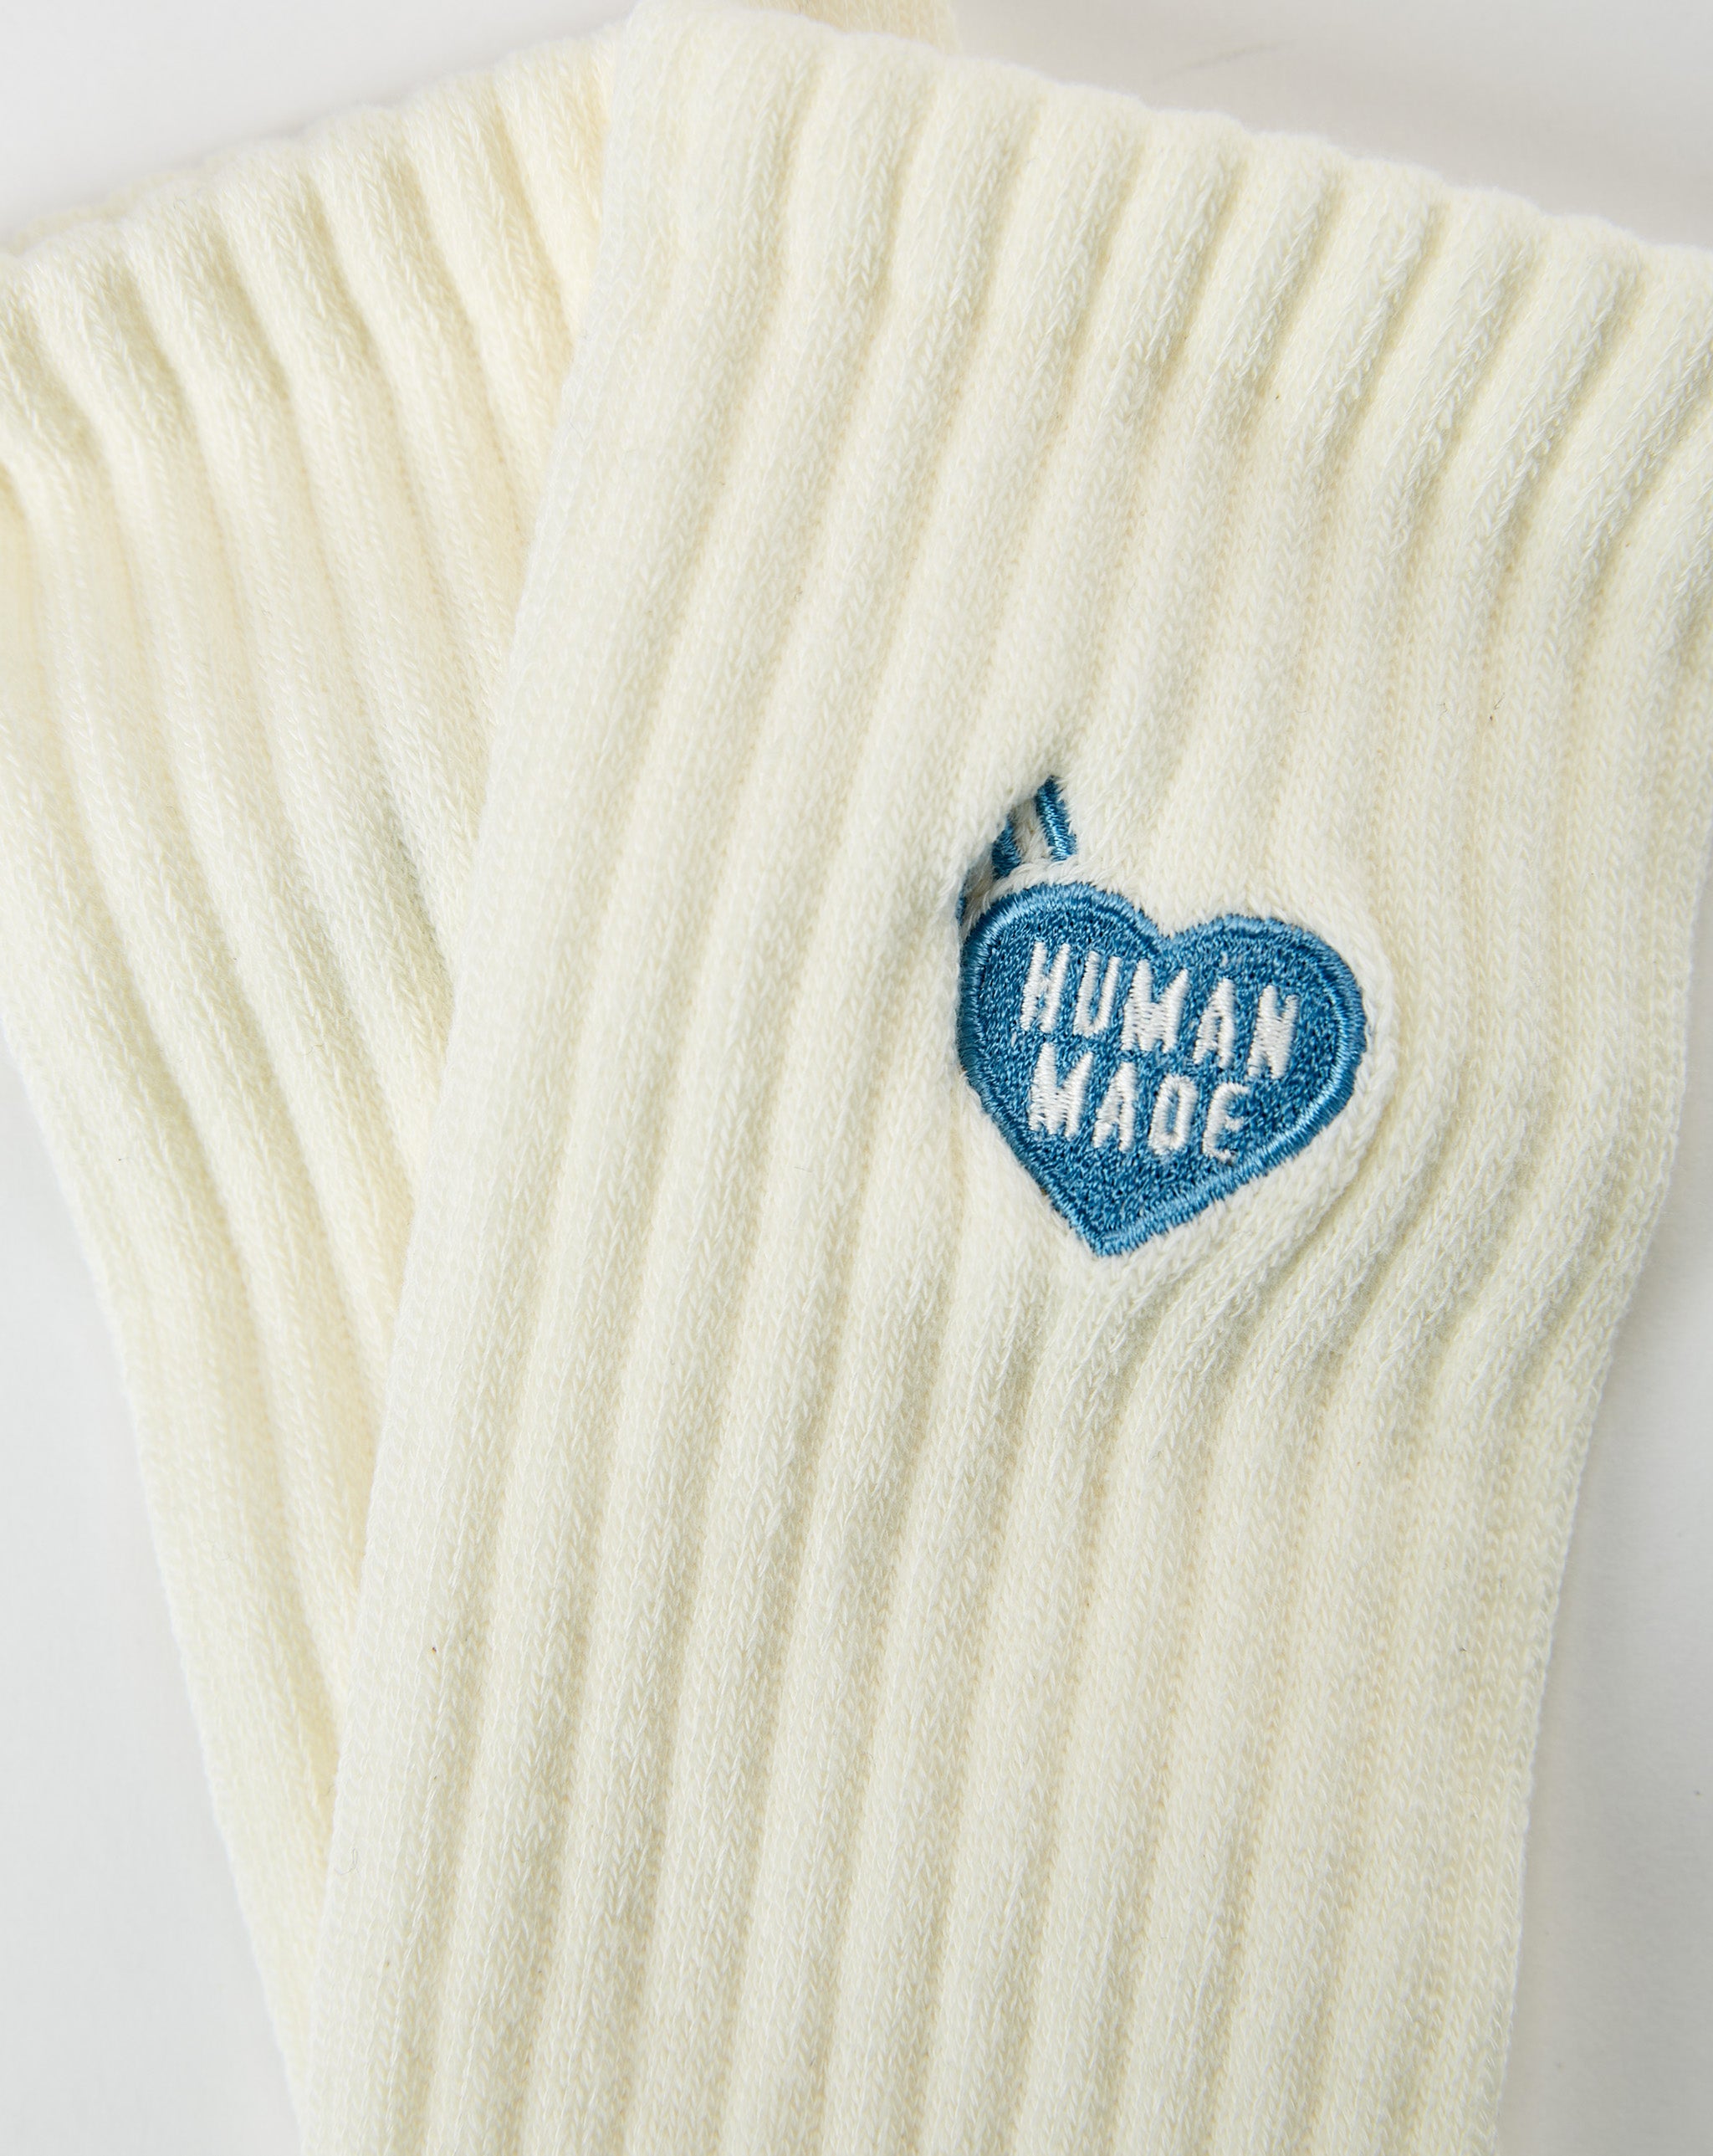 Human Made Pile Socks  - XHIBITION